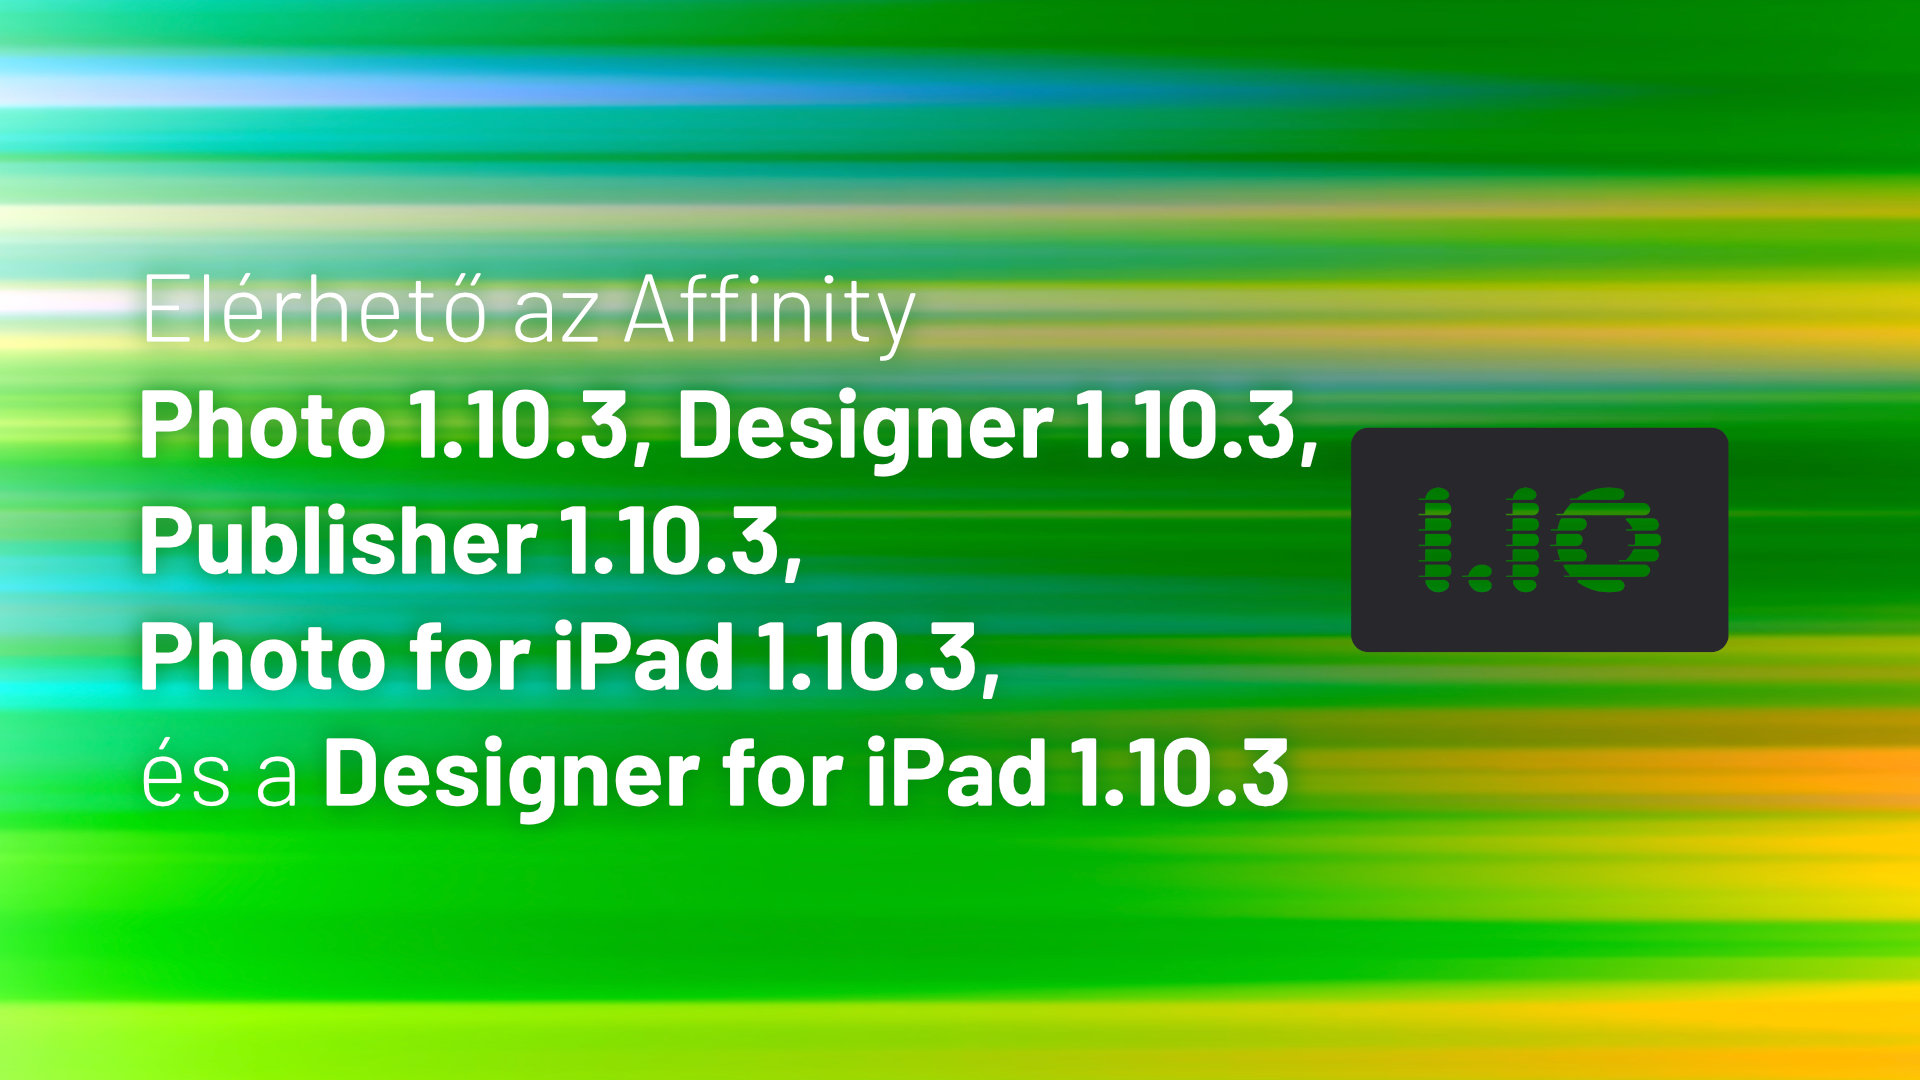 az Affinity Photo 1.10.3, Designer 1.10.3 és Publisher 1.10.3